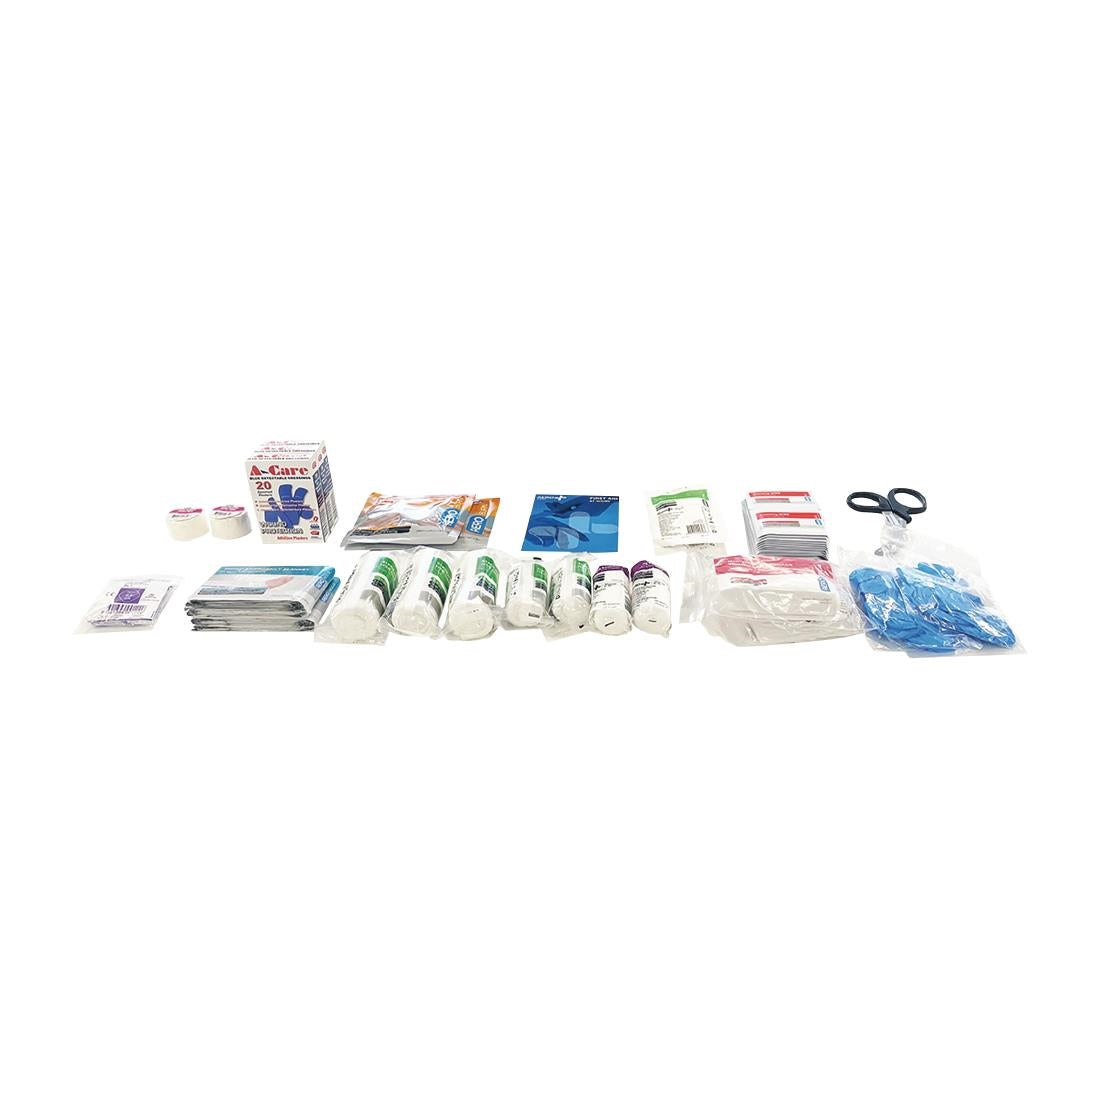 FT592 Aero Aerokit BS 8599 Medium Catering First Aid Kit Refill JD Catering Equipment Solutions Ltd